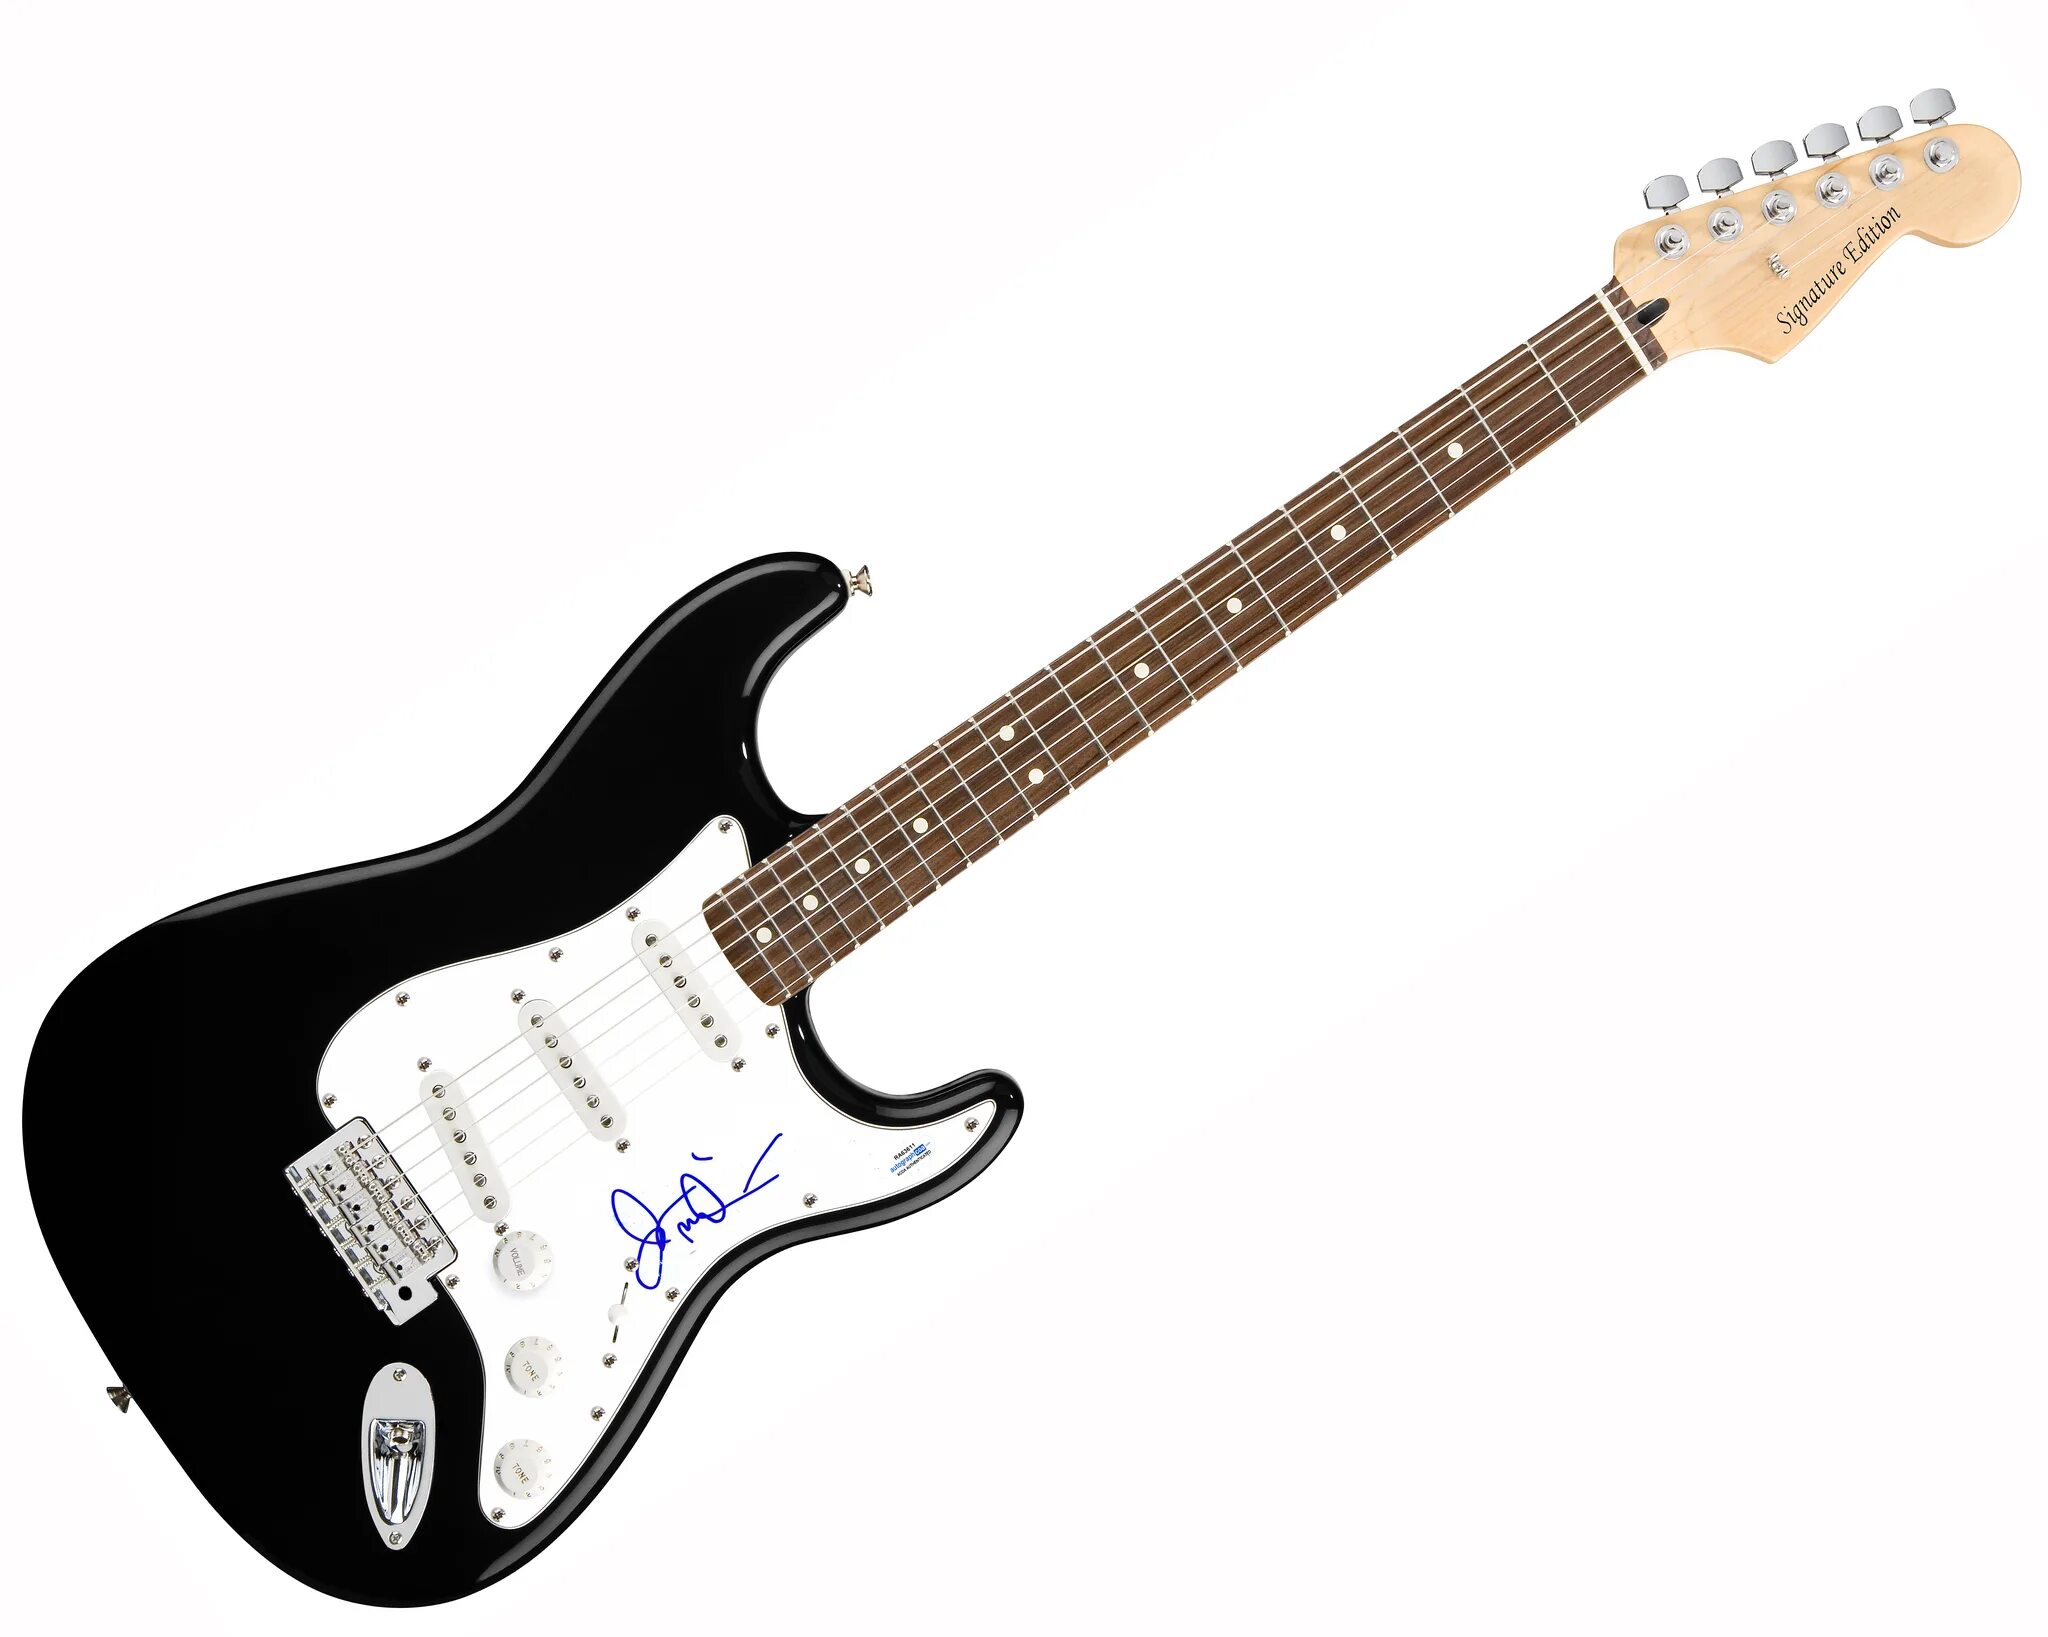 Электрогитара Fender Stratocaster. Гитара Фендер стратокастер. Электрогитара Fender American professional Stratocaster. Фендер стратокастер черный.